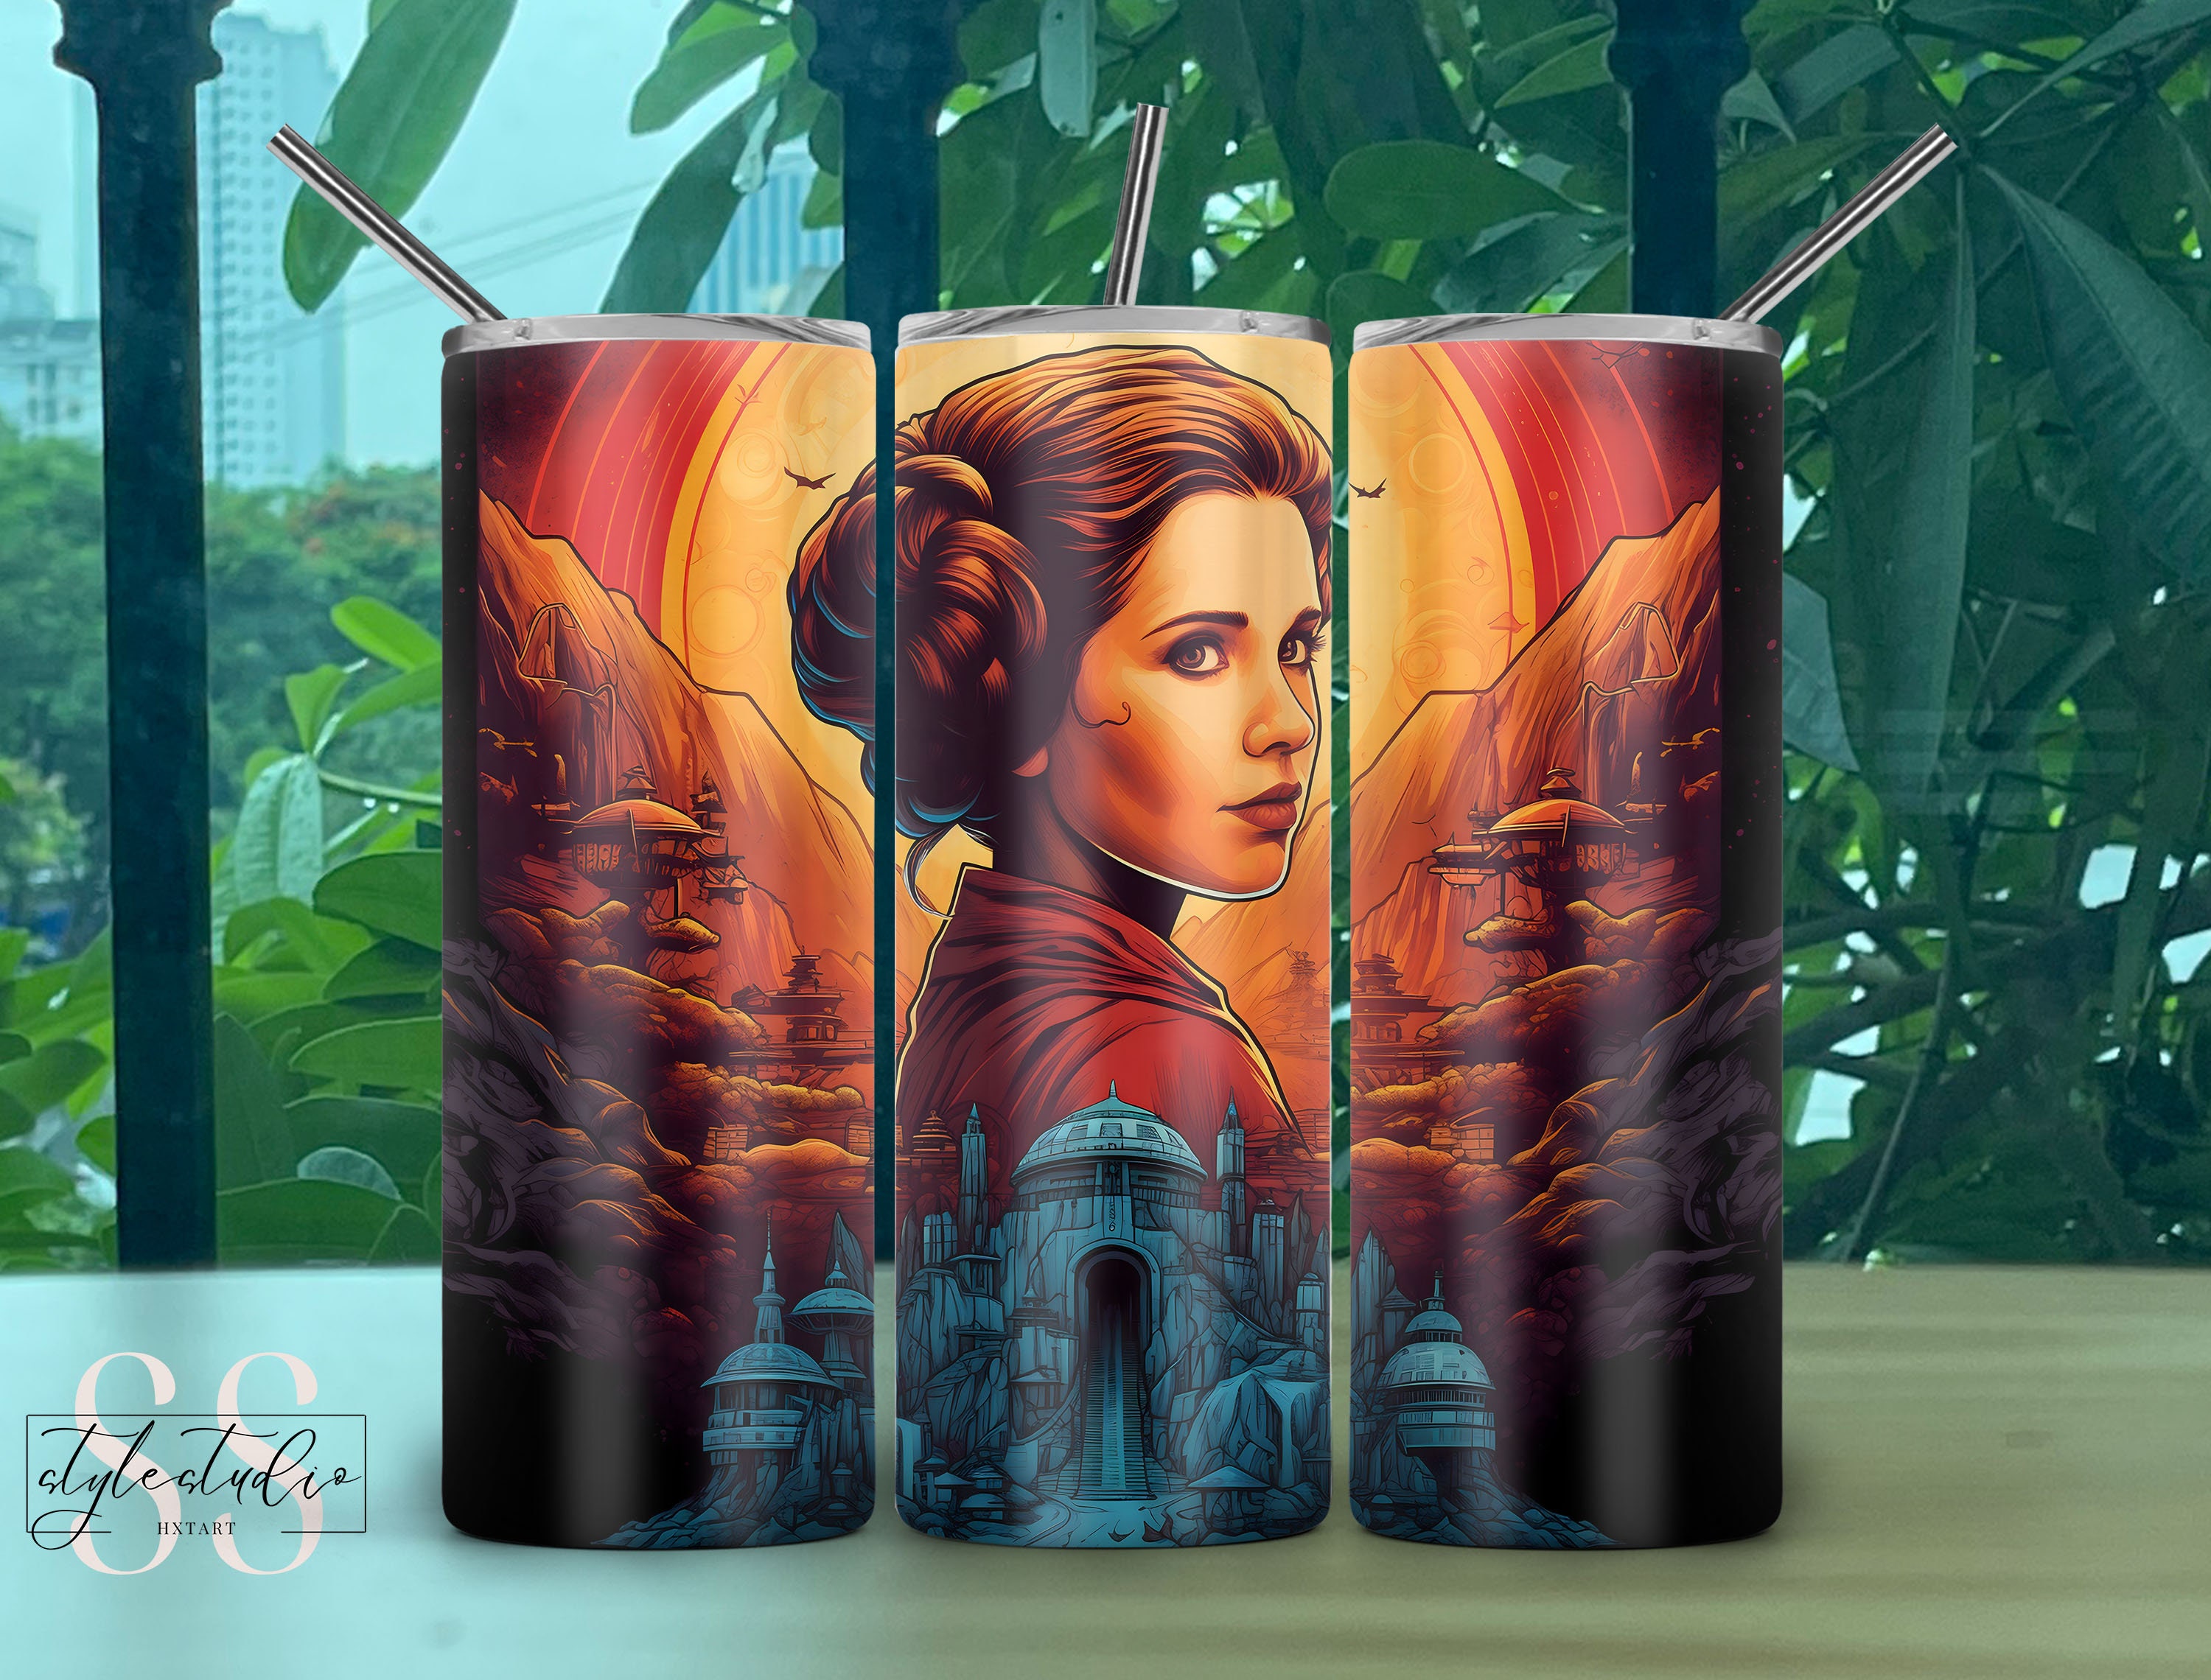 Star Wars Leia The Galaxy Is Female Shaker Bottle